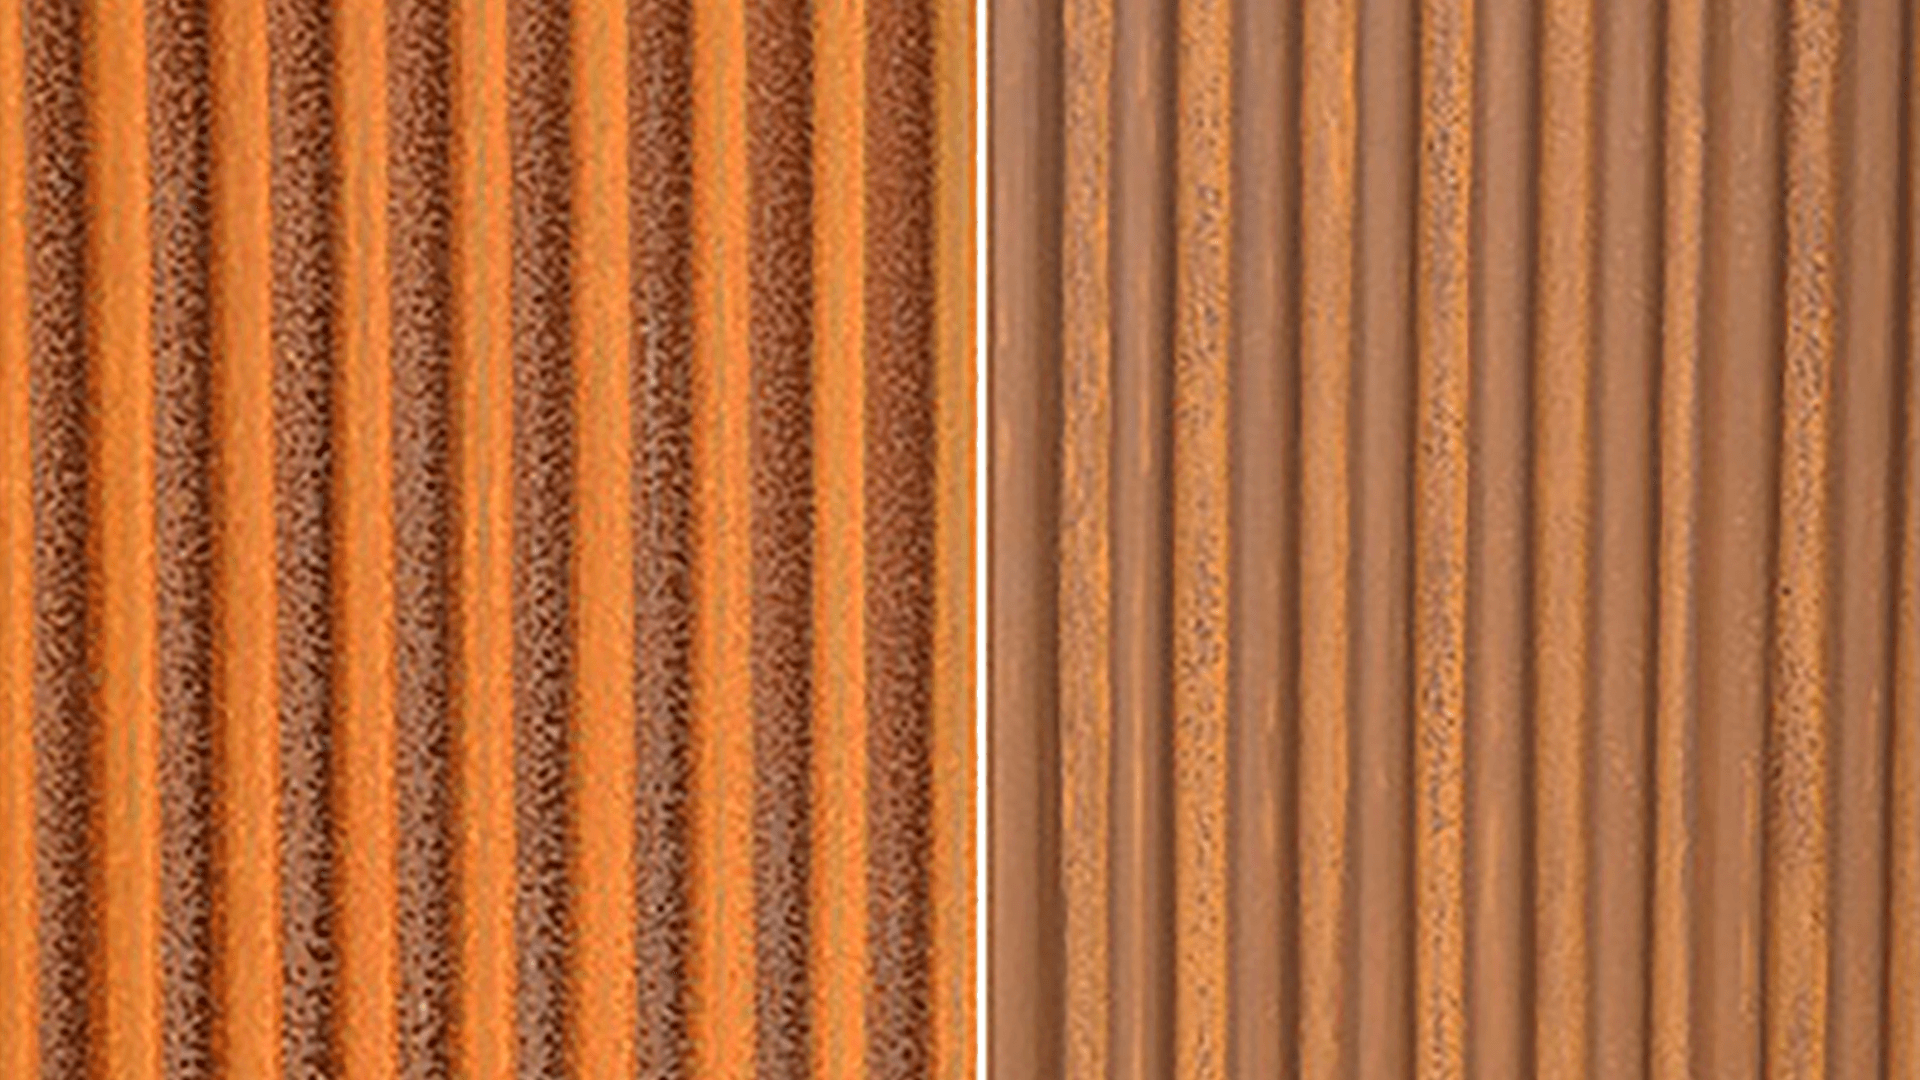 Mini corrugated narrow ripple pattern mixed rusty galvanized roofing metal